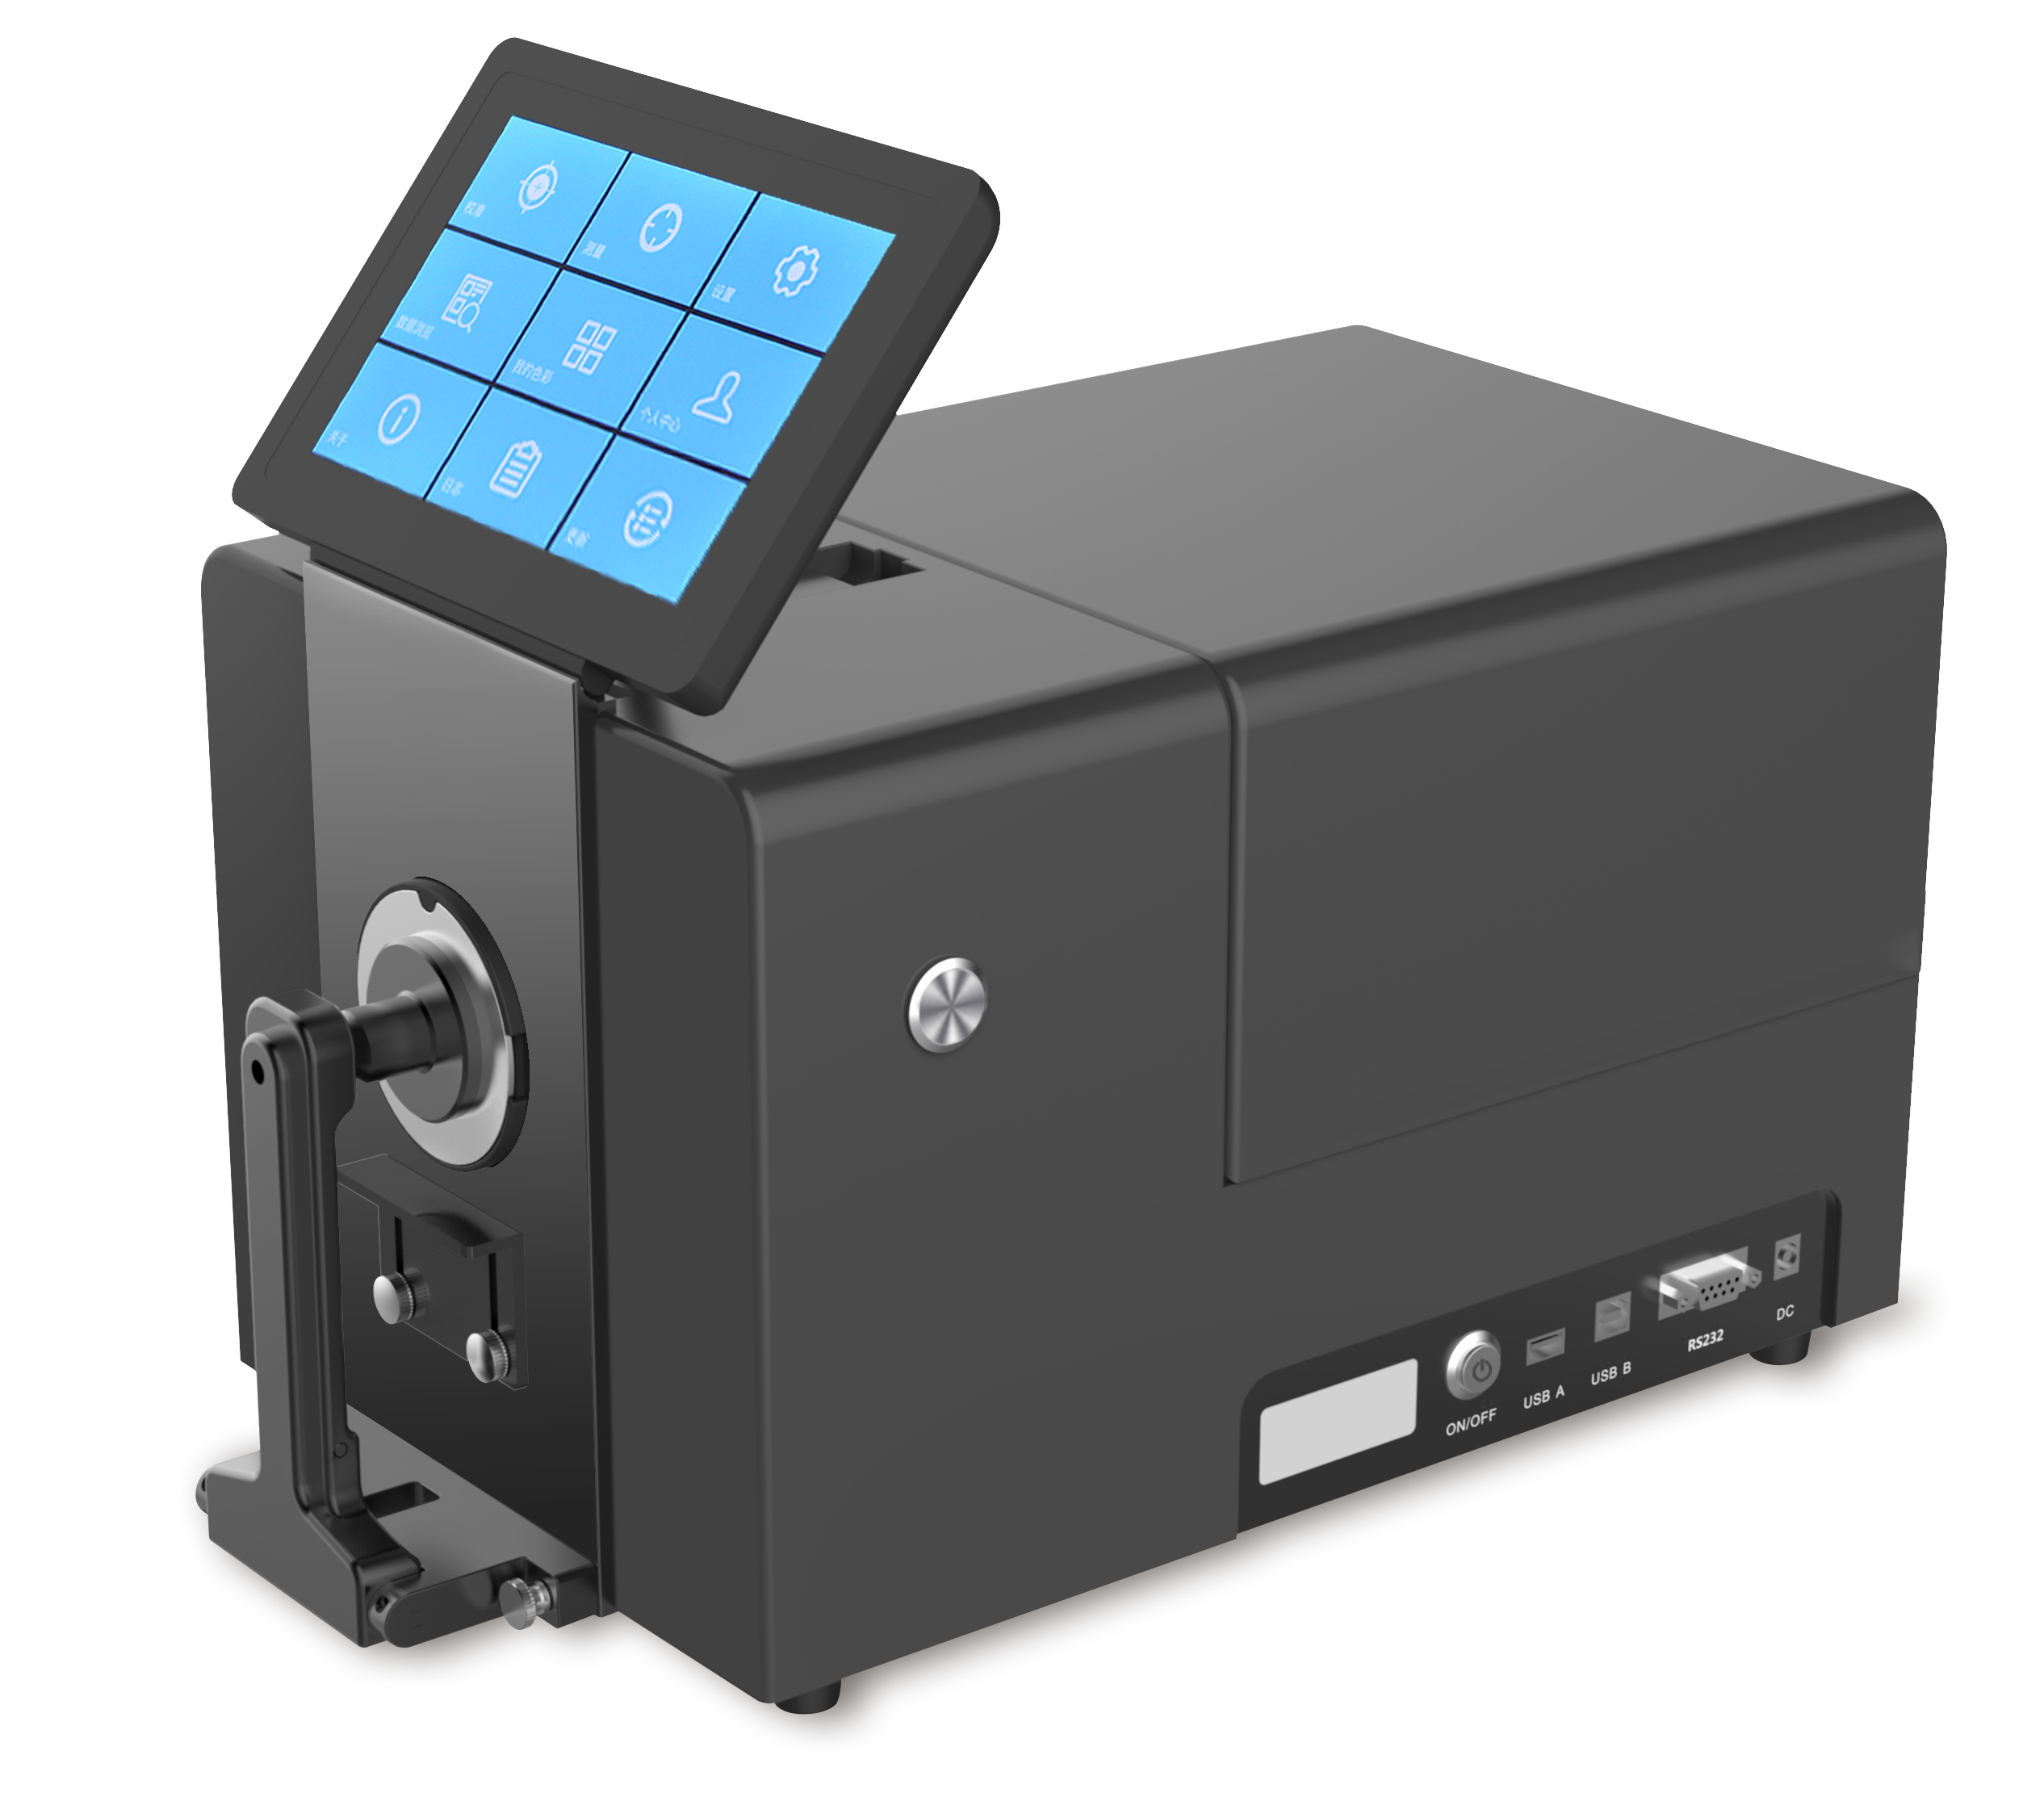 ZY-820P desktop spectrophotometer